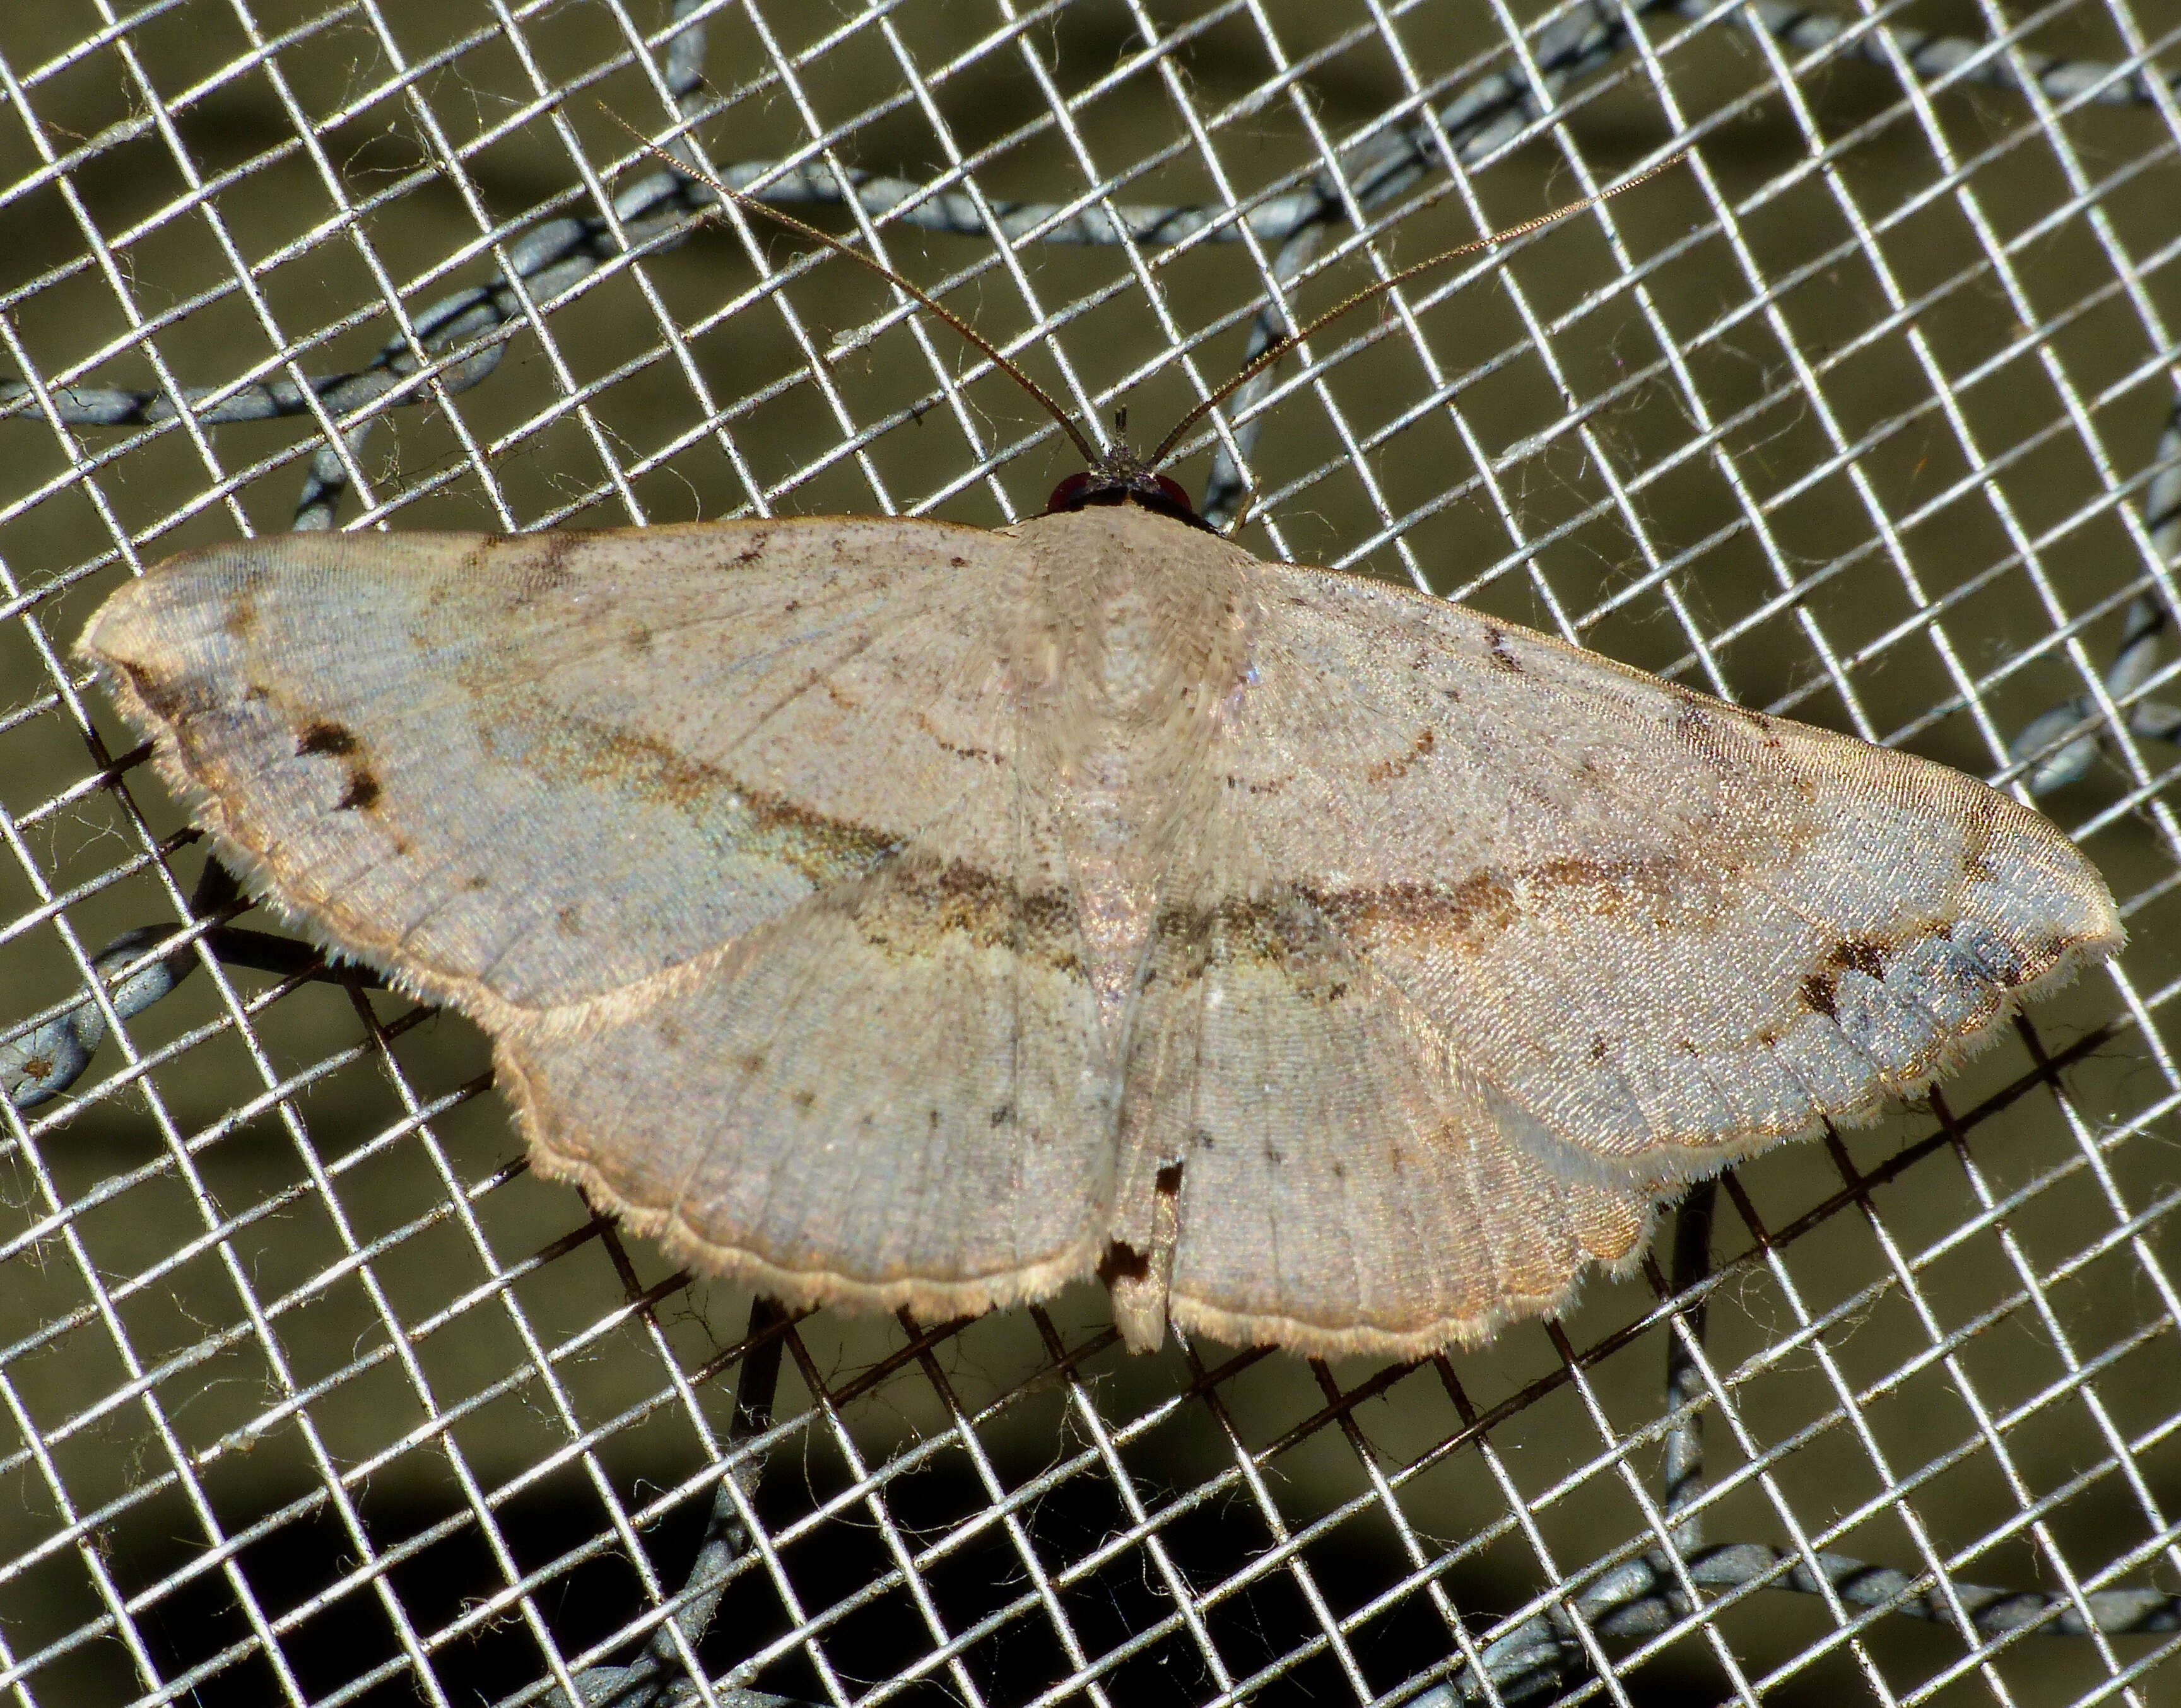 Image of Fruit-piercing Moths